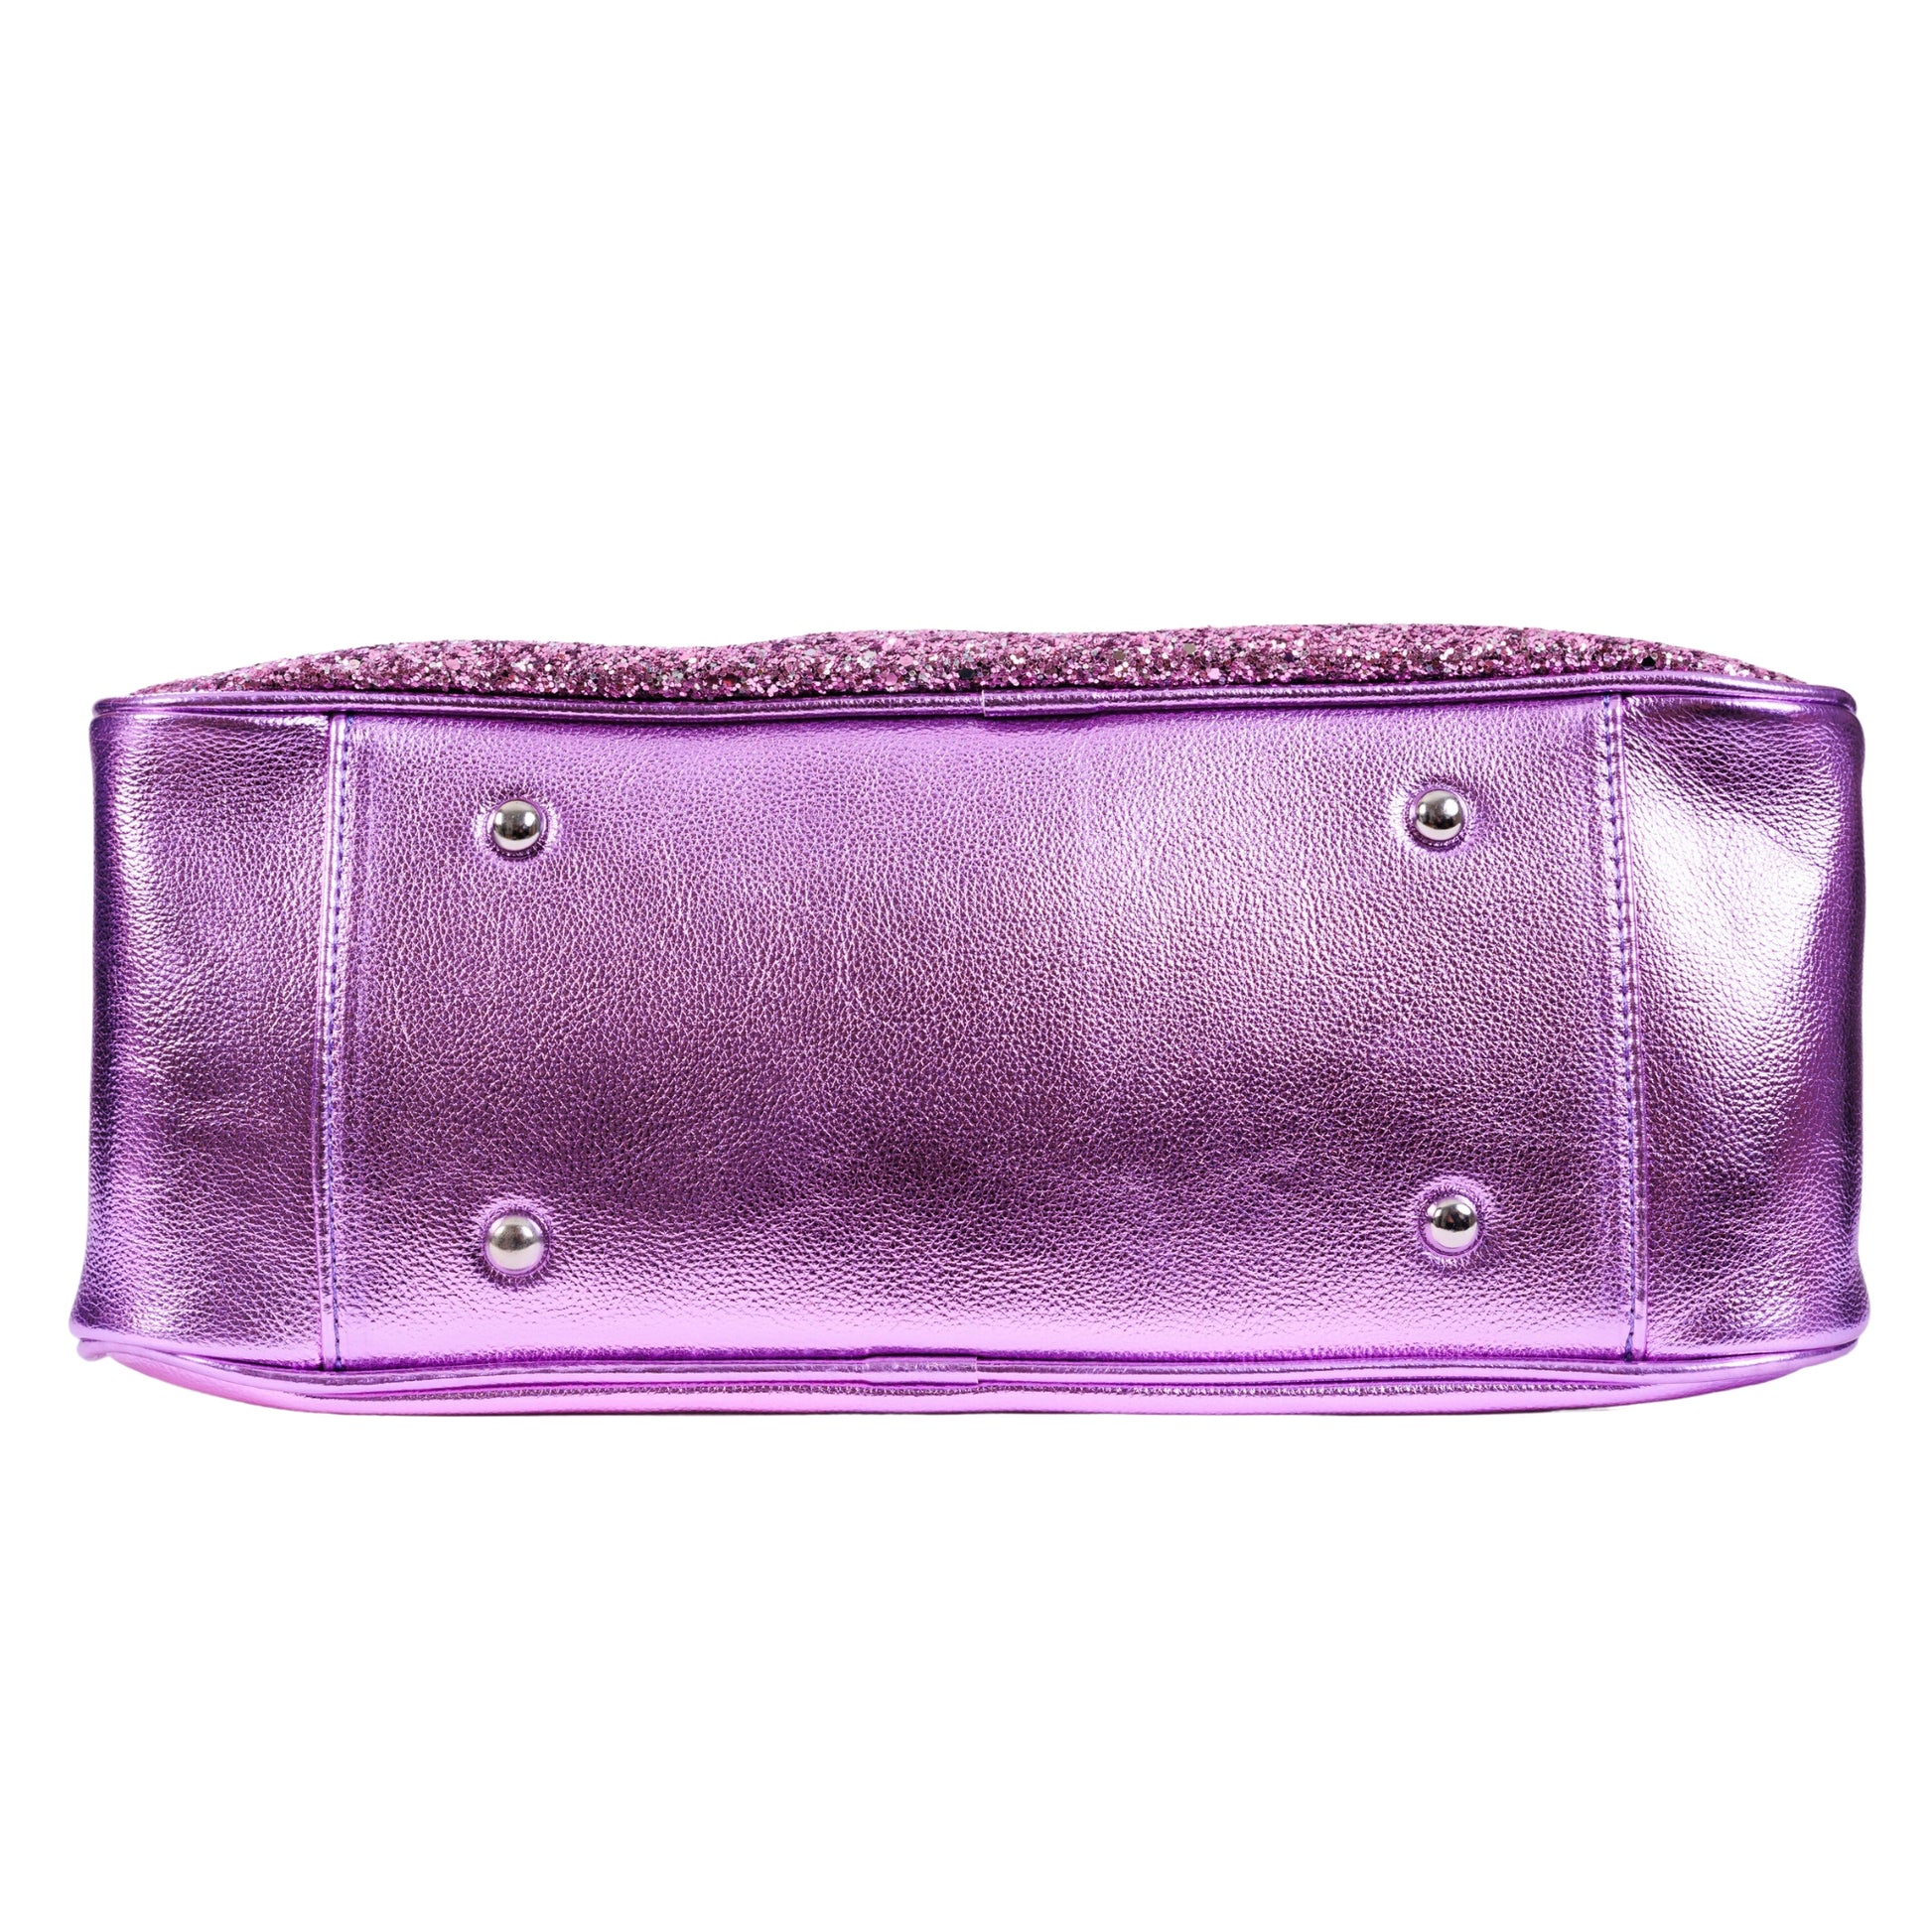 Amethyst Bowler Bag by RainbowsAndFairies.com (Purple Glitter - Sparkle - Lilac - Kitsch - Bowler Style - Bowling Bag - Handbag - Vintage Inspired - Rockabilly) - SKU: BG_BOWLR_AMTHS_ORG - Pic 07